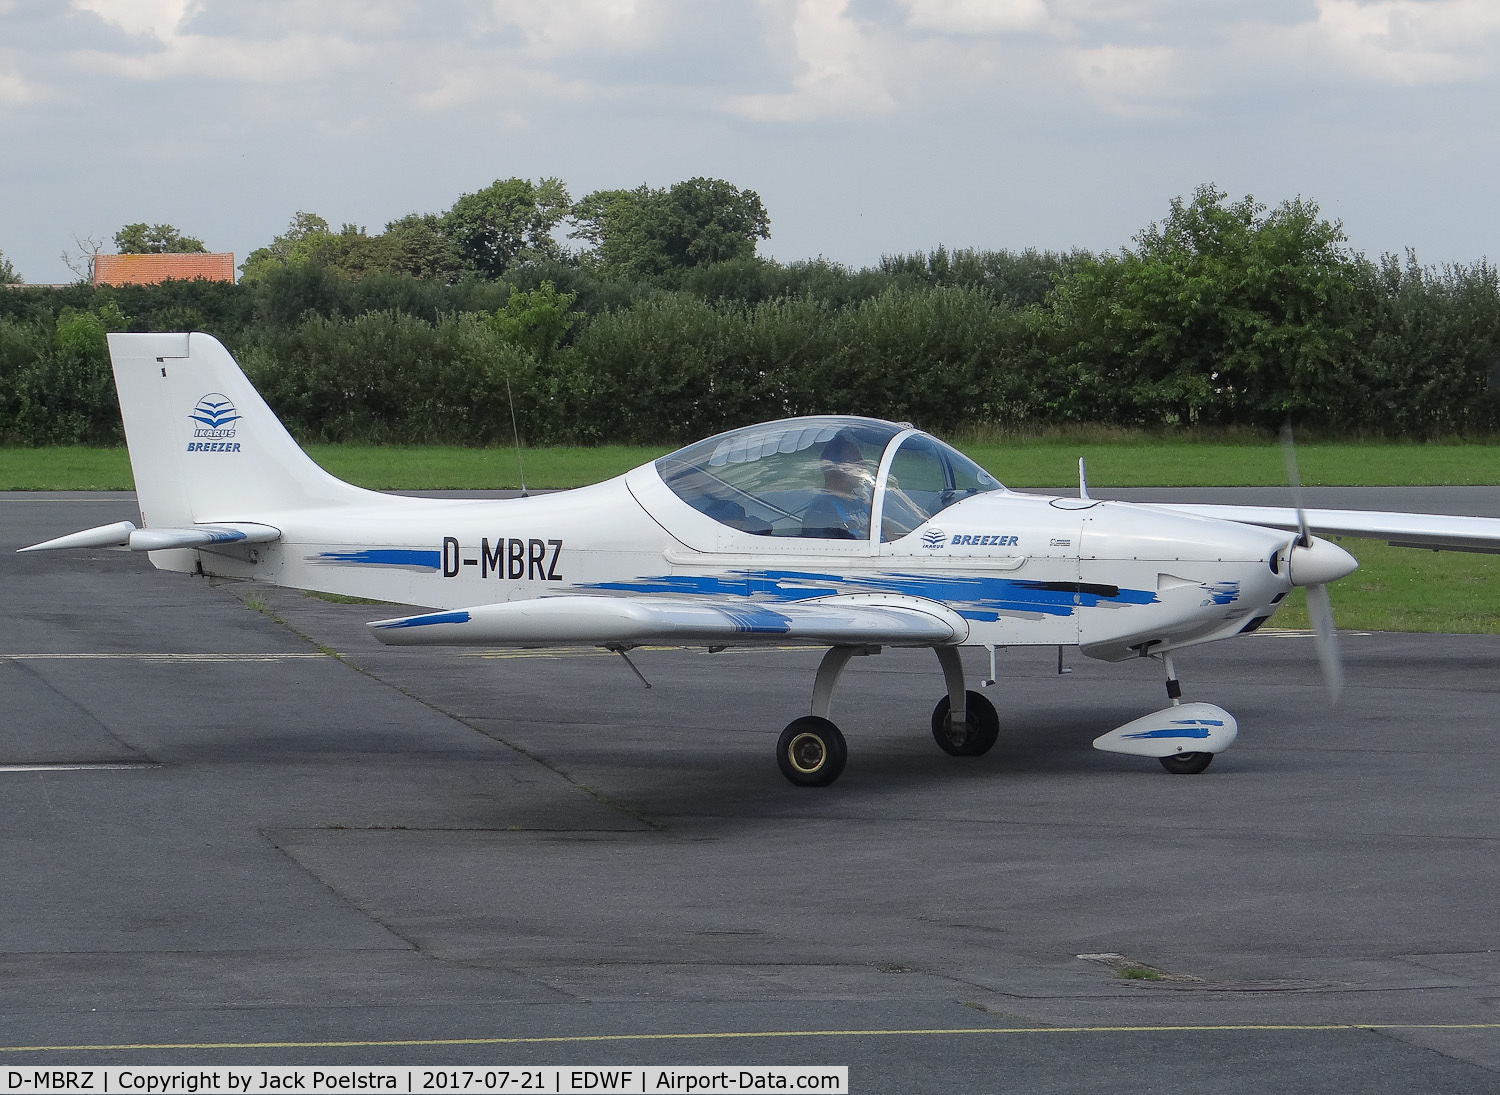 D-MBRZ, 2004 Aerostyle Breezer C/N 033, At Leer airport